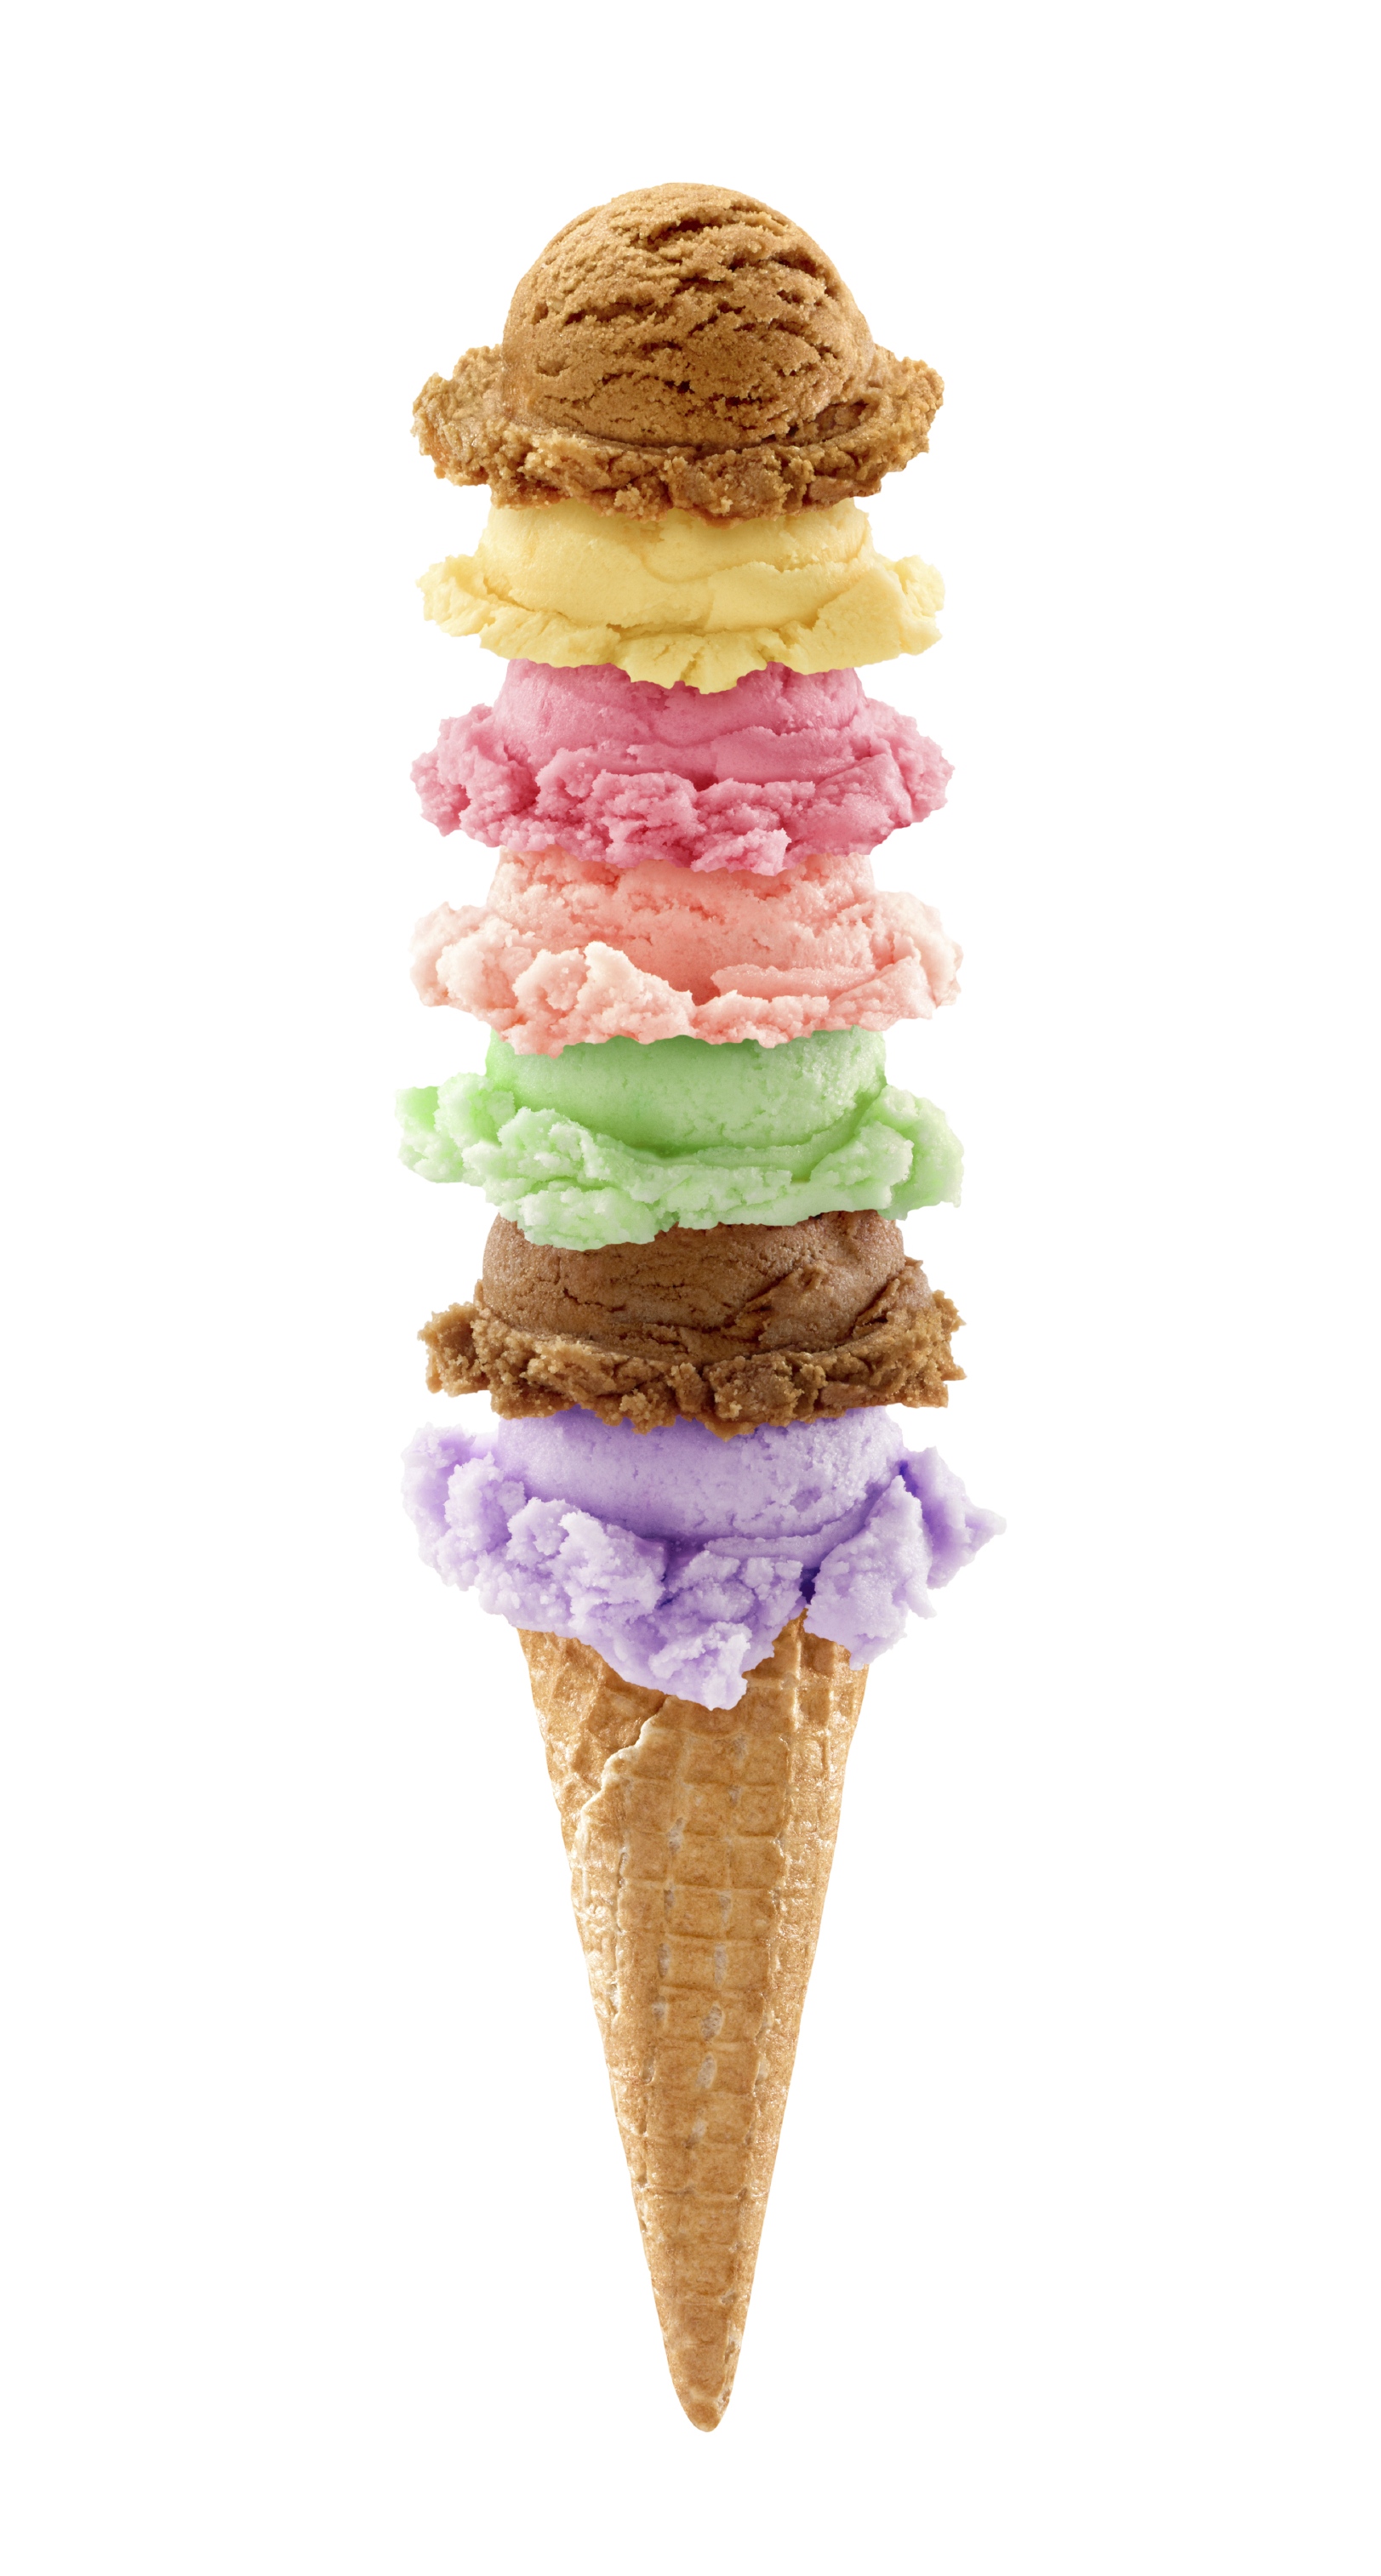 http://www.hallsley.com/files/2013/07/7-scoop-ice-cream-cone.jpg